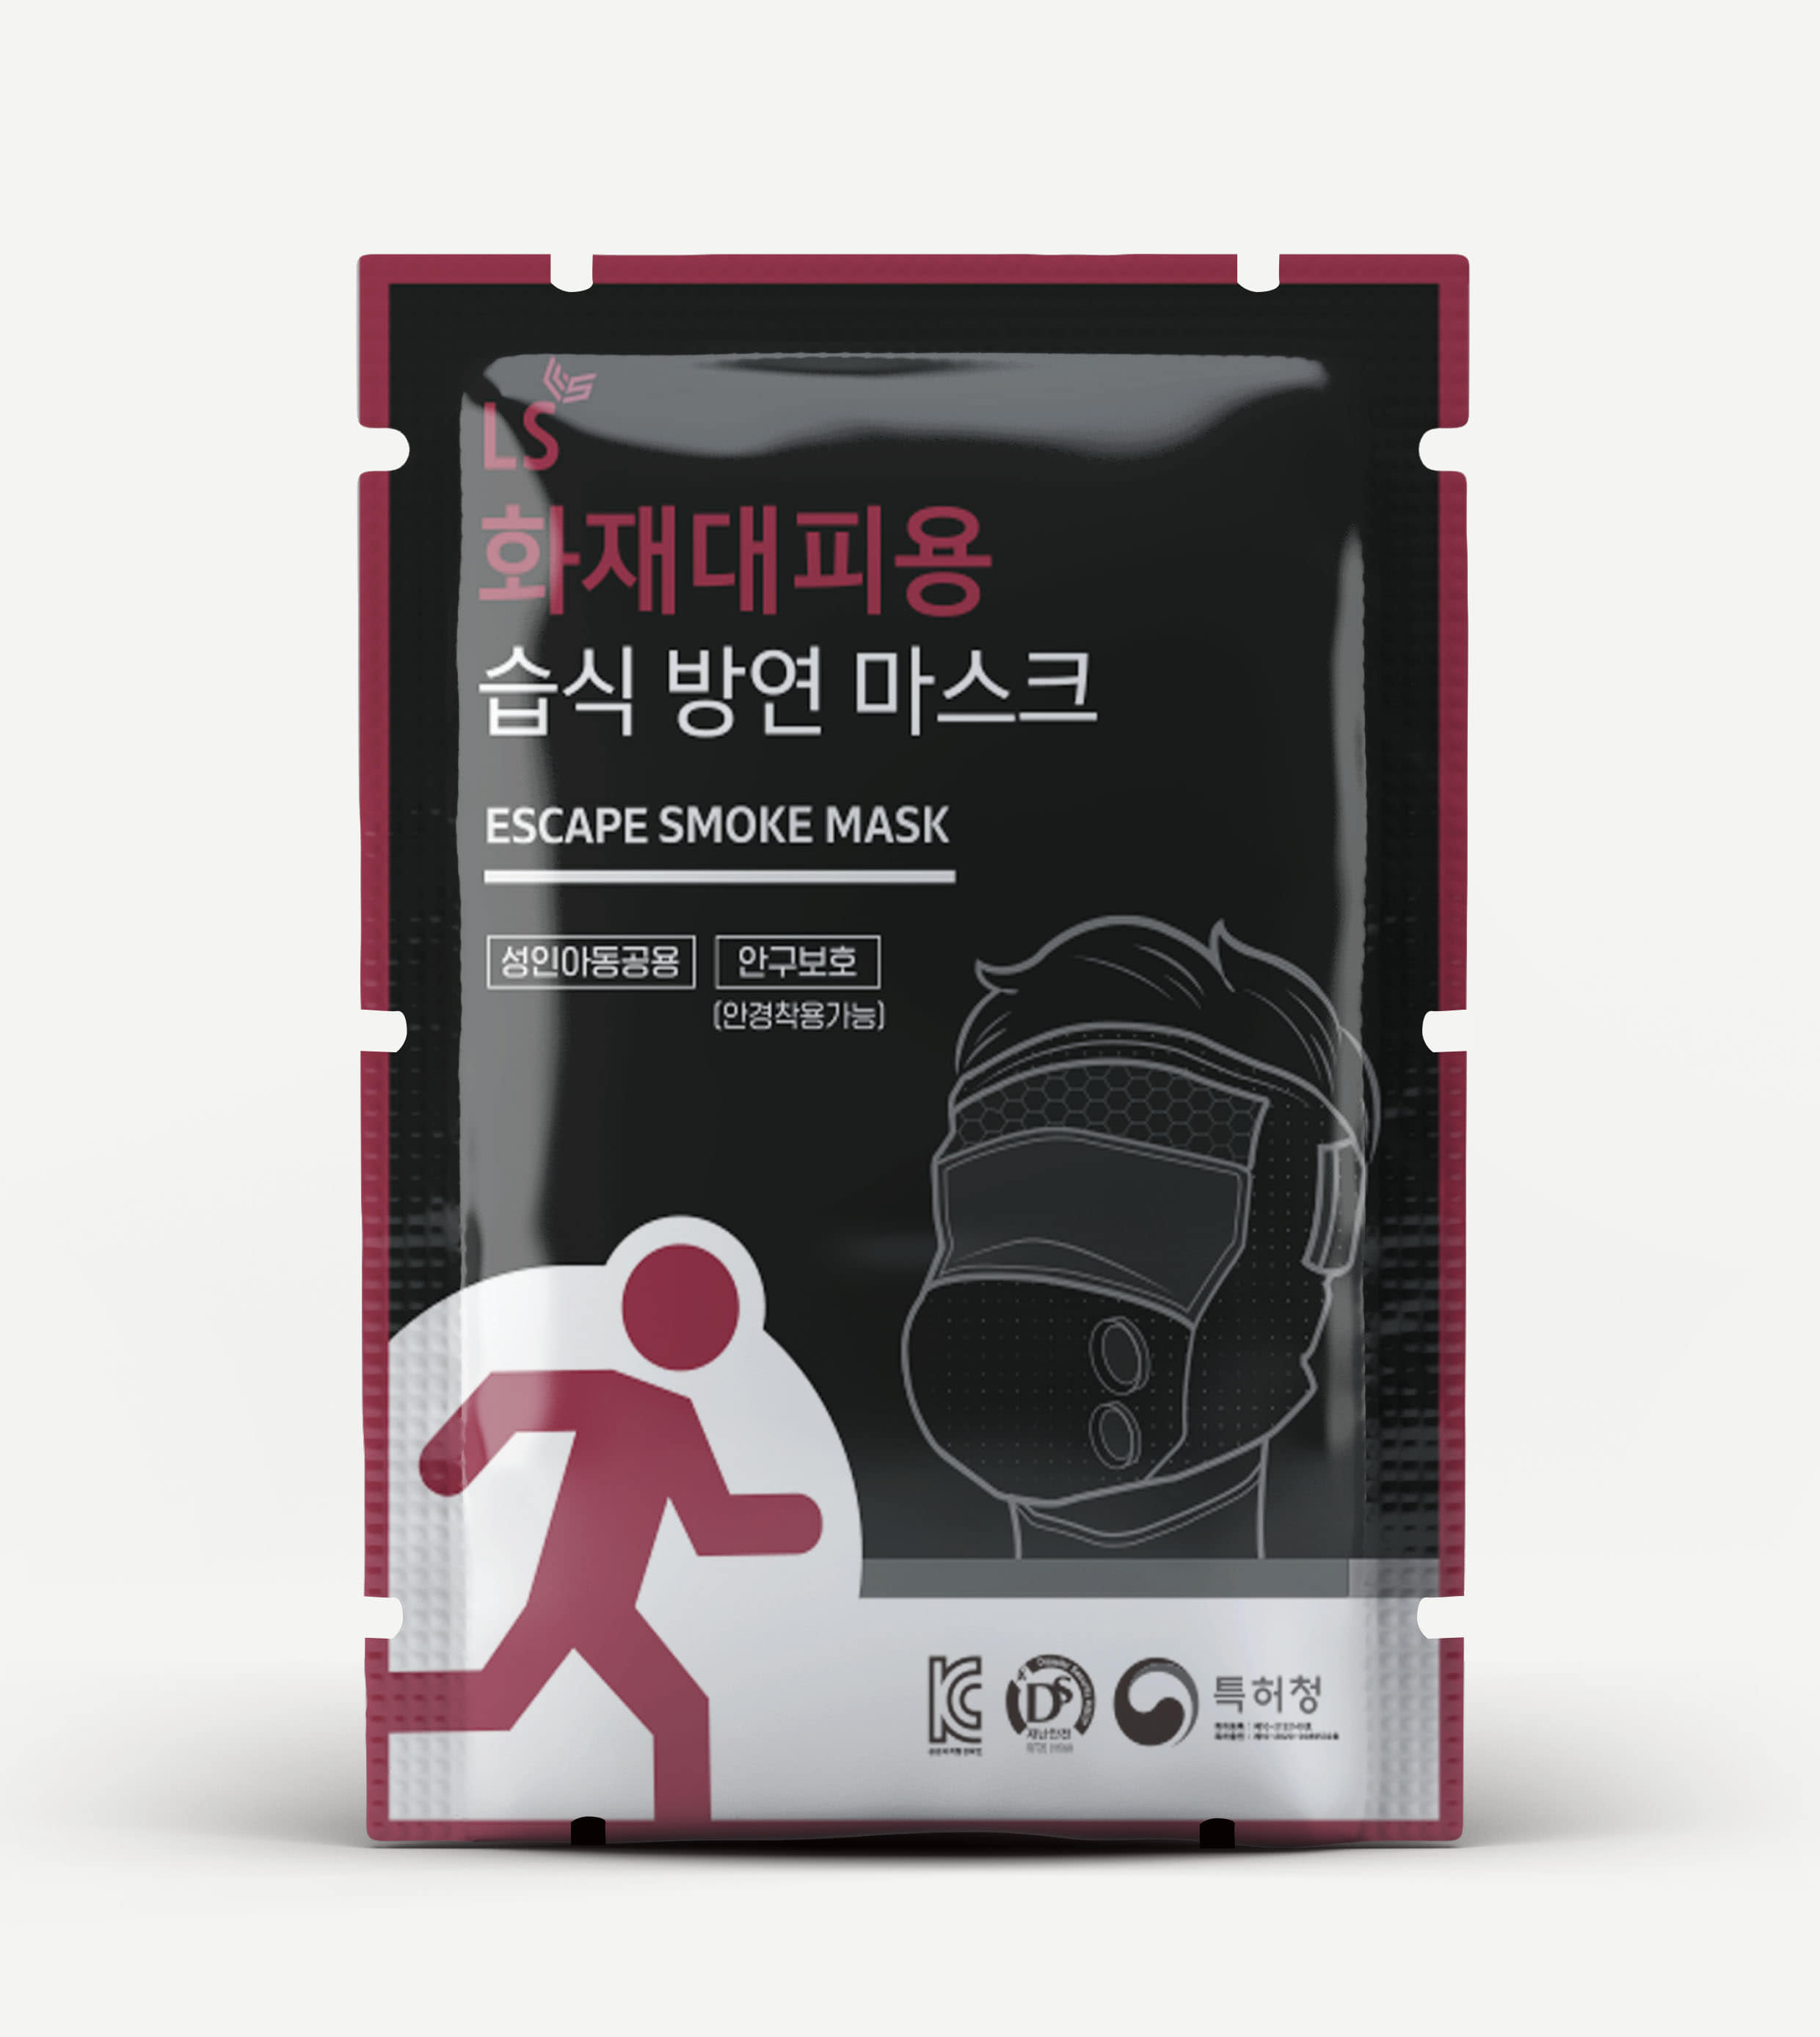 LS 화재 대피 습식 방연 마스크 - 안전용품 특허제품